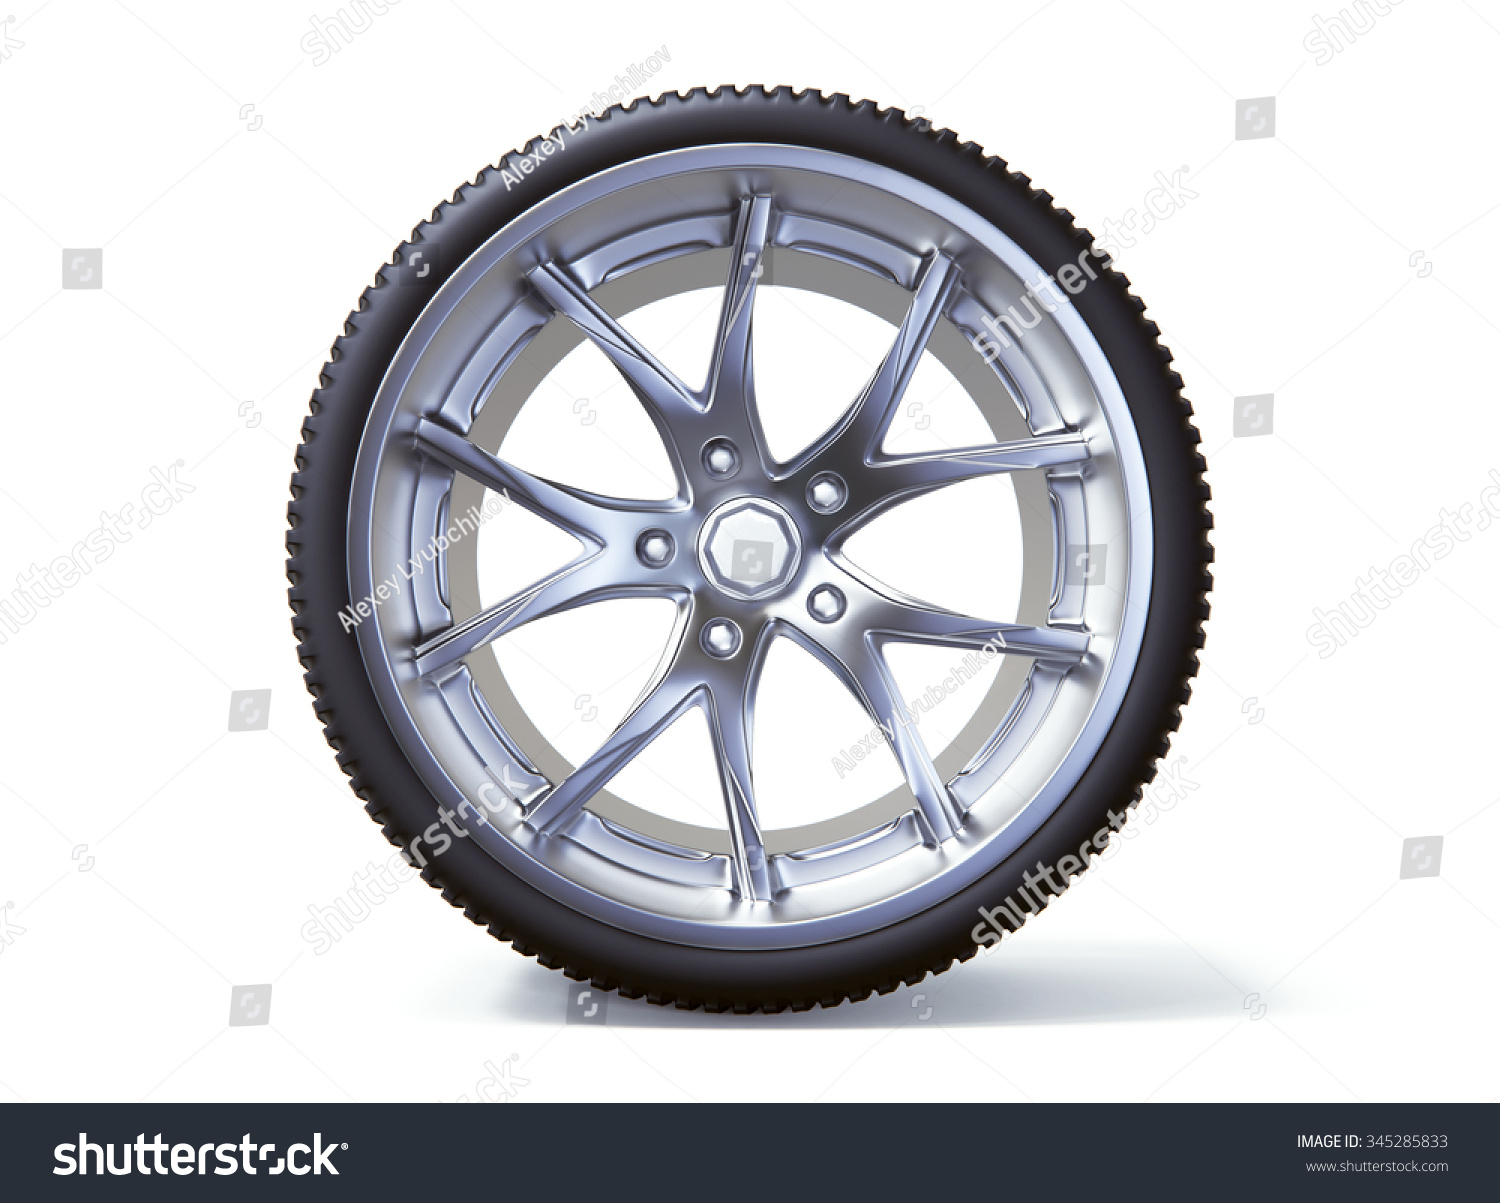 Edit Vectors Free Online wheel car Shutterstock Editor